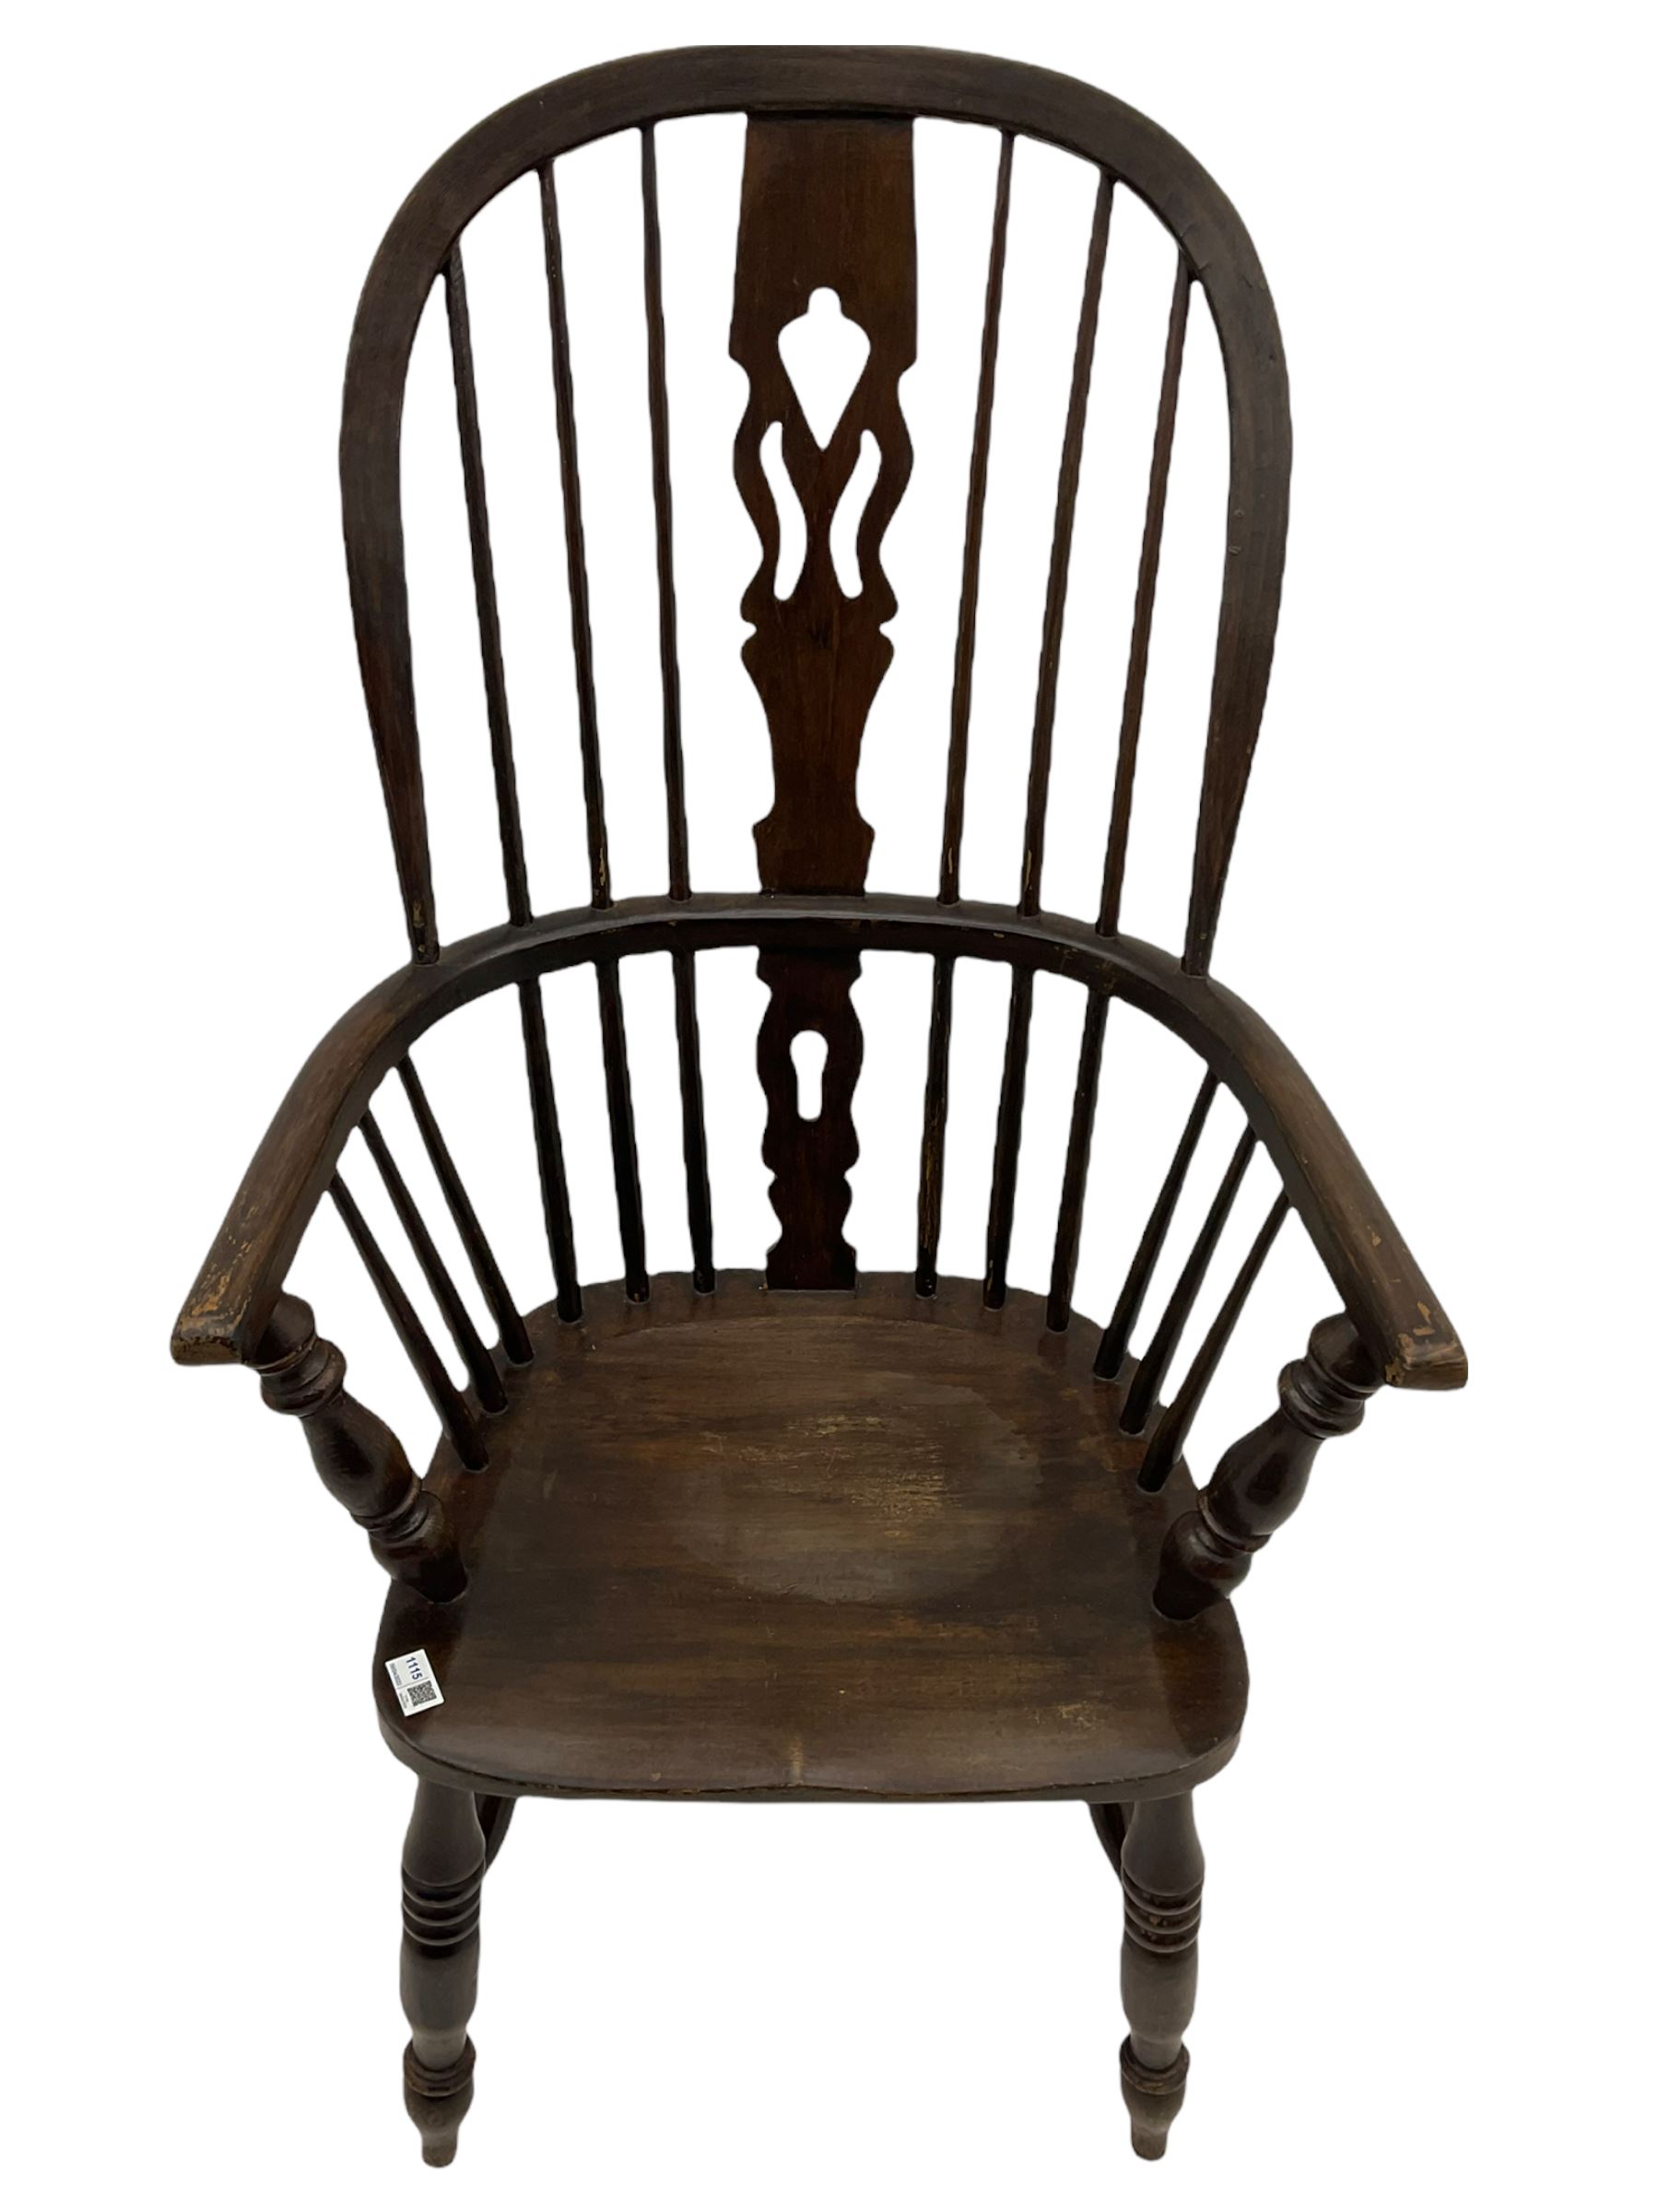 19th century beech Windsor armchair (W60cm) - Image 4 of 8